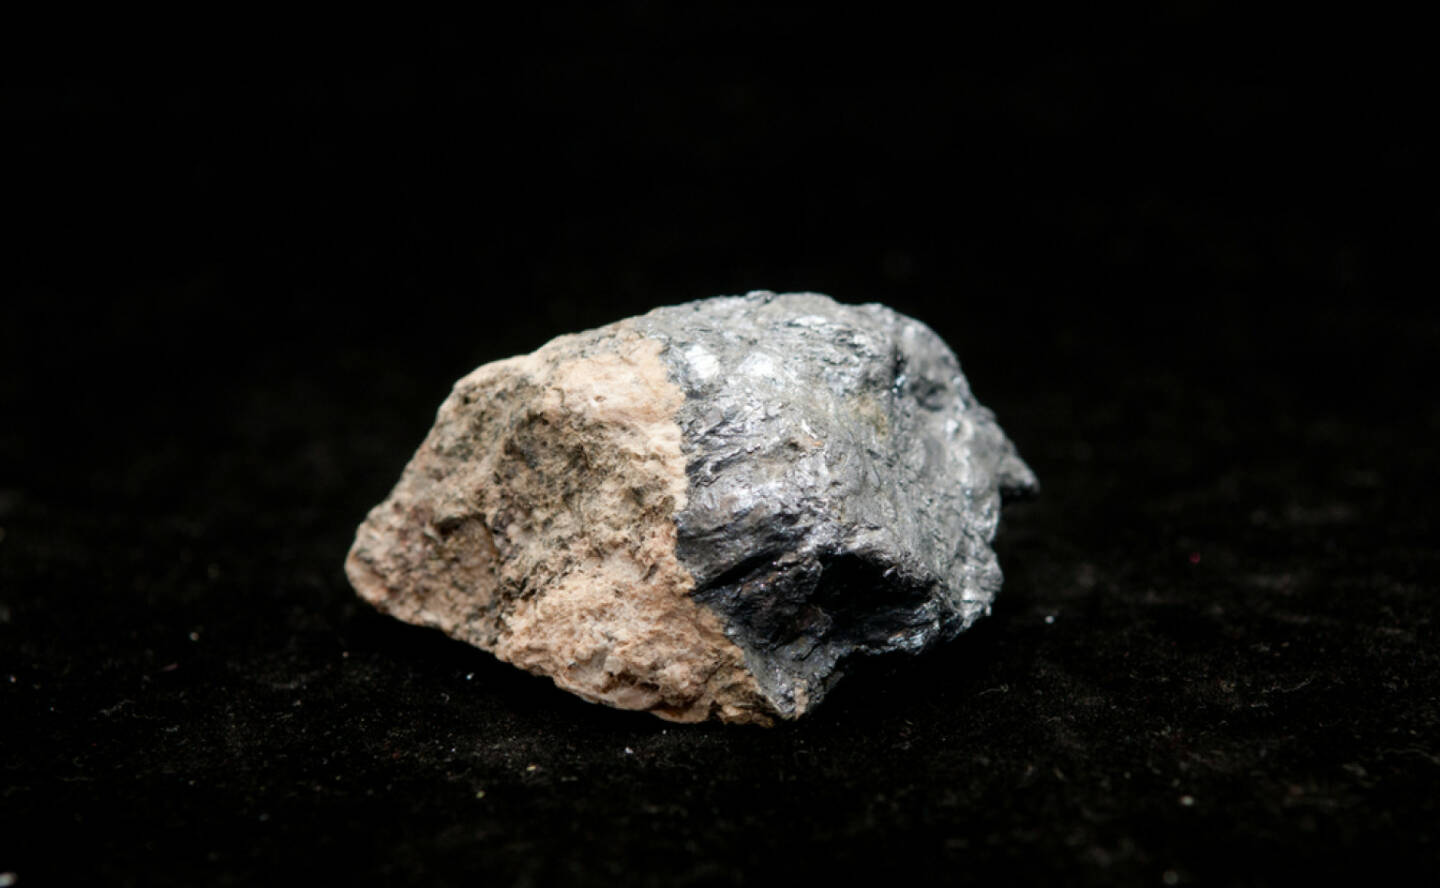 Molybdän, seltene Erden, Metall, http://www.shutterstock.com/de/pic-128806951/stock-photo-molybdenite-a-molybdenum-sample-mineral-a-rare-earth-metal.html